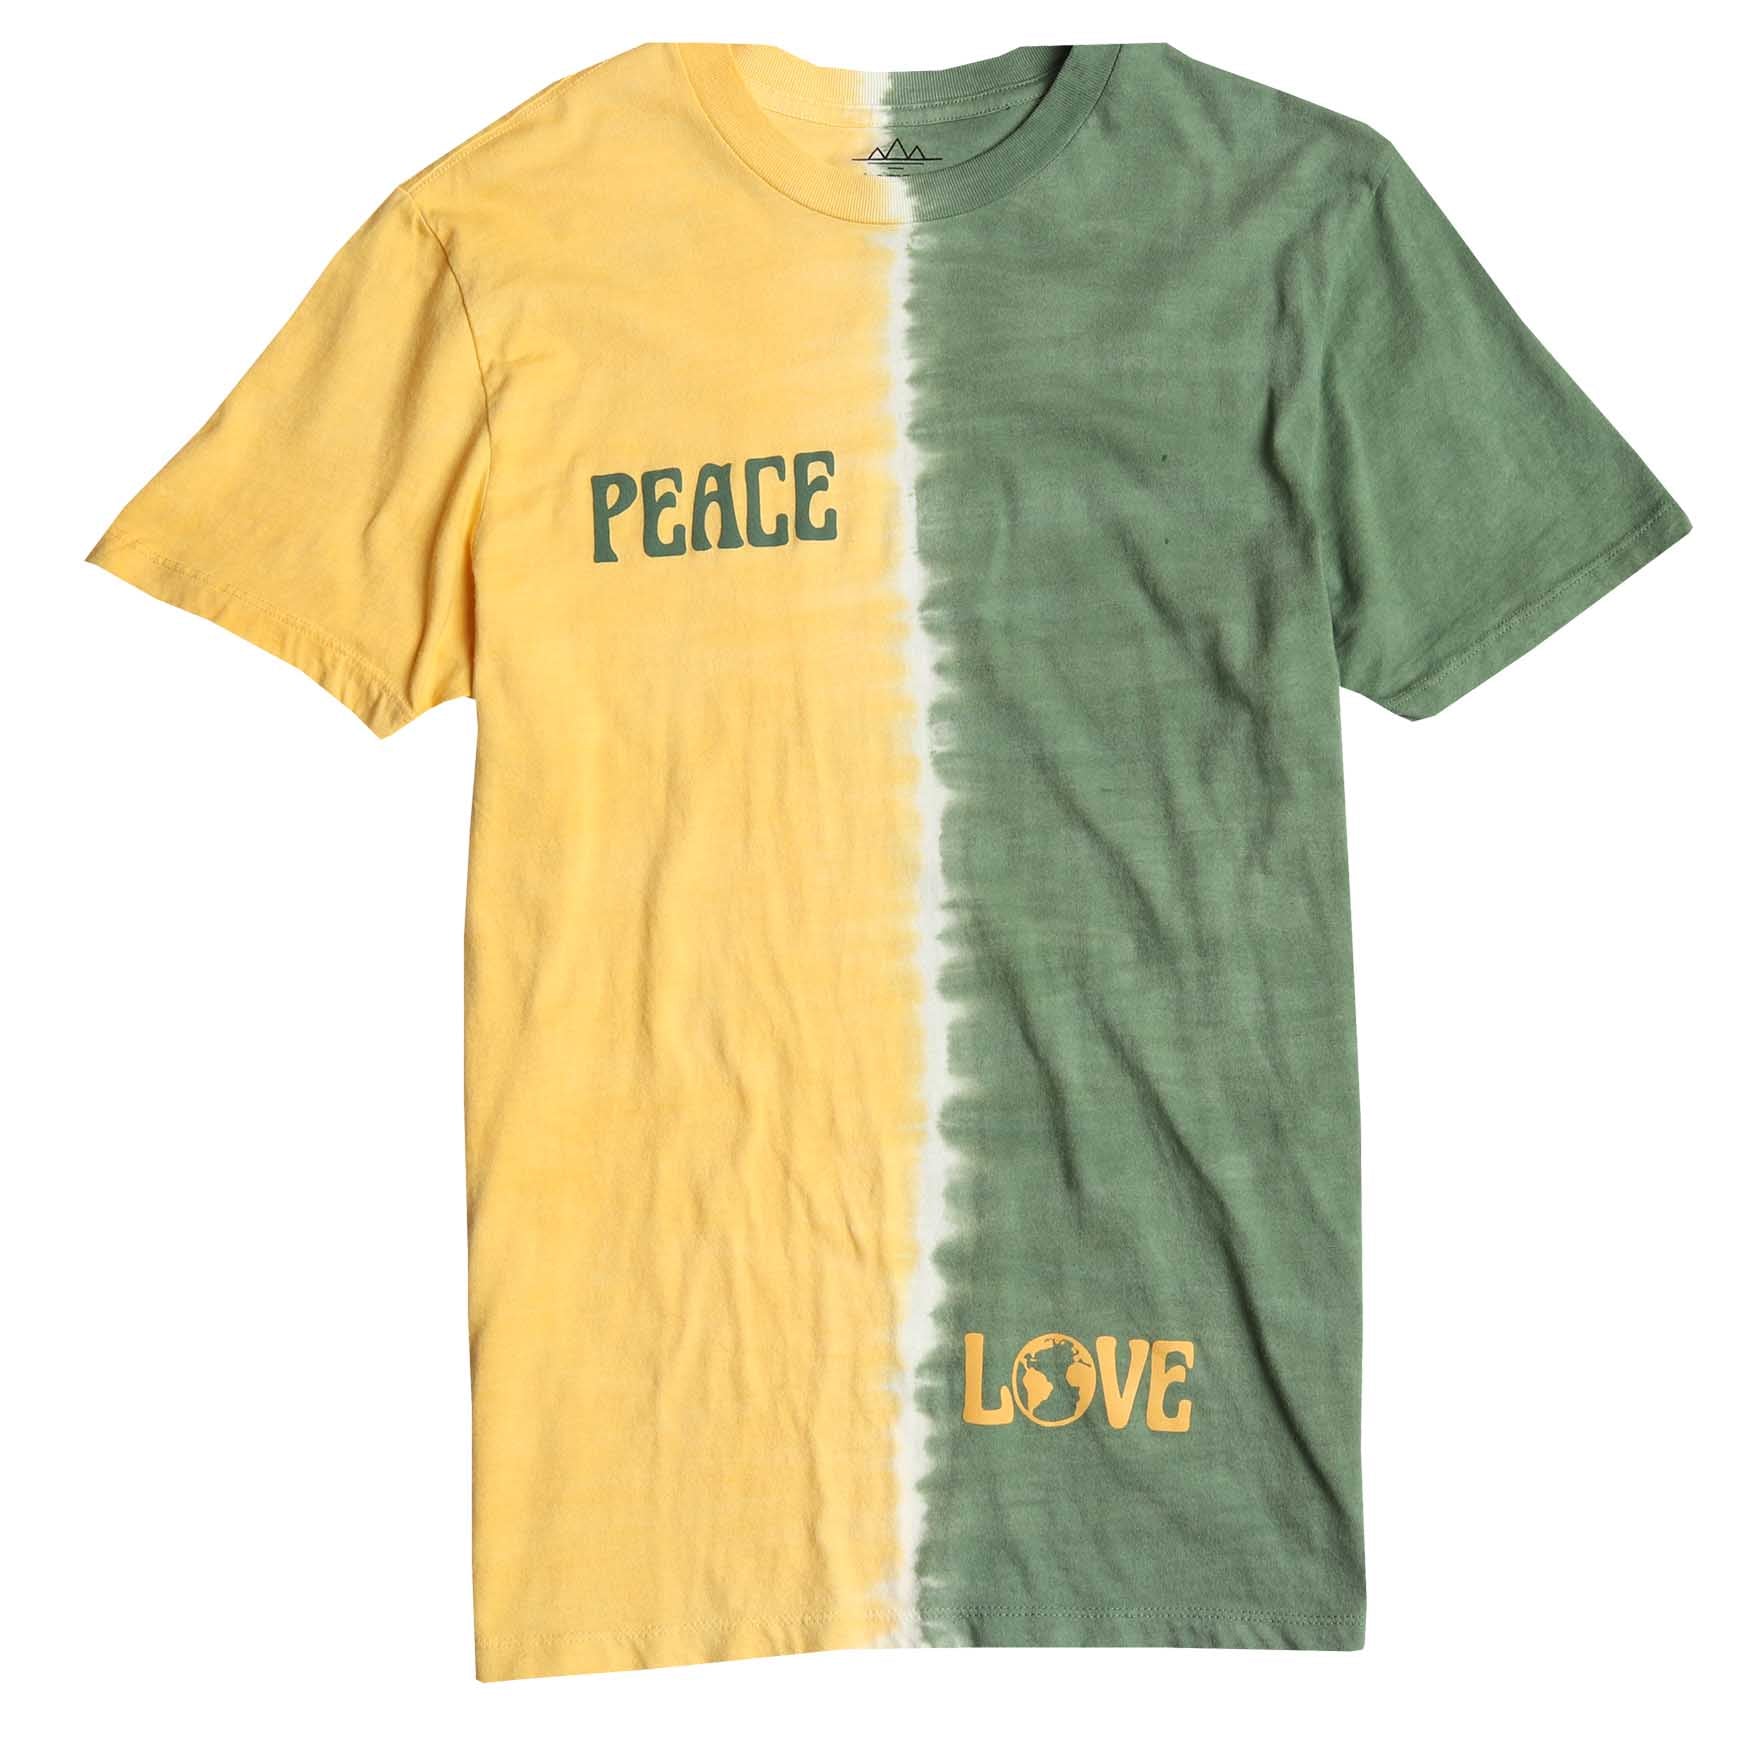 PEACE AND LOVE half dip-dye tee